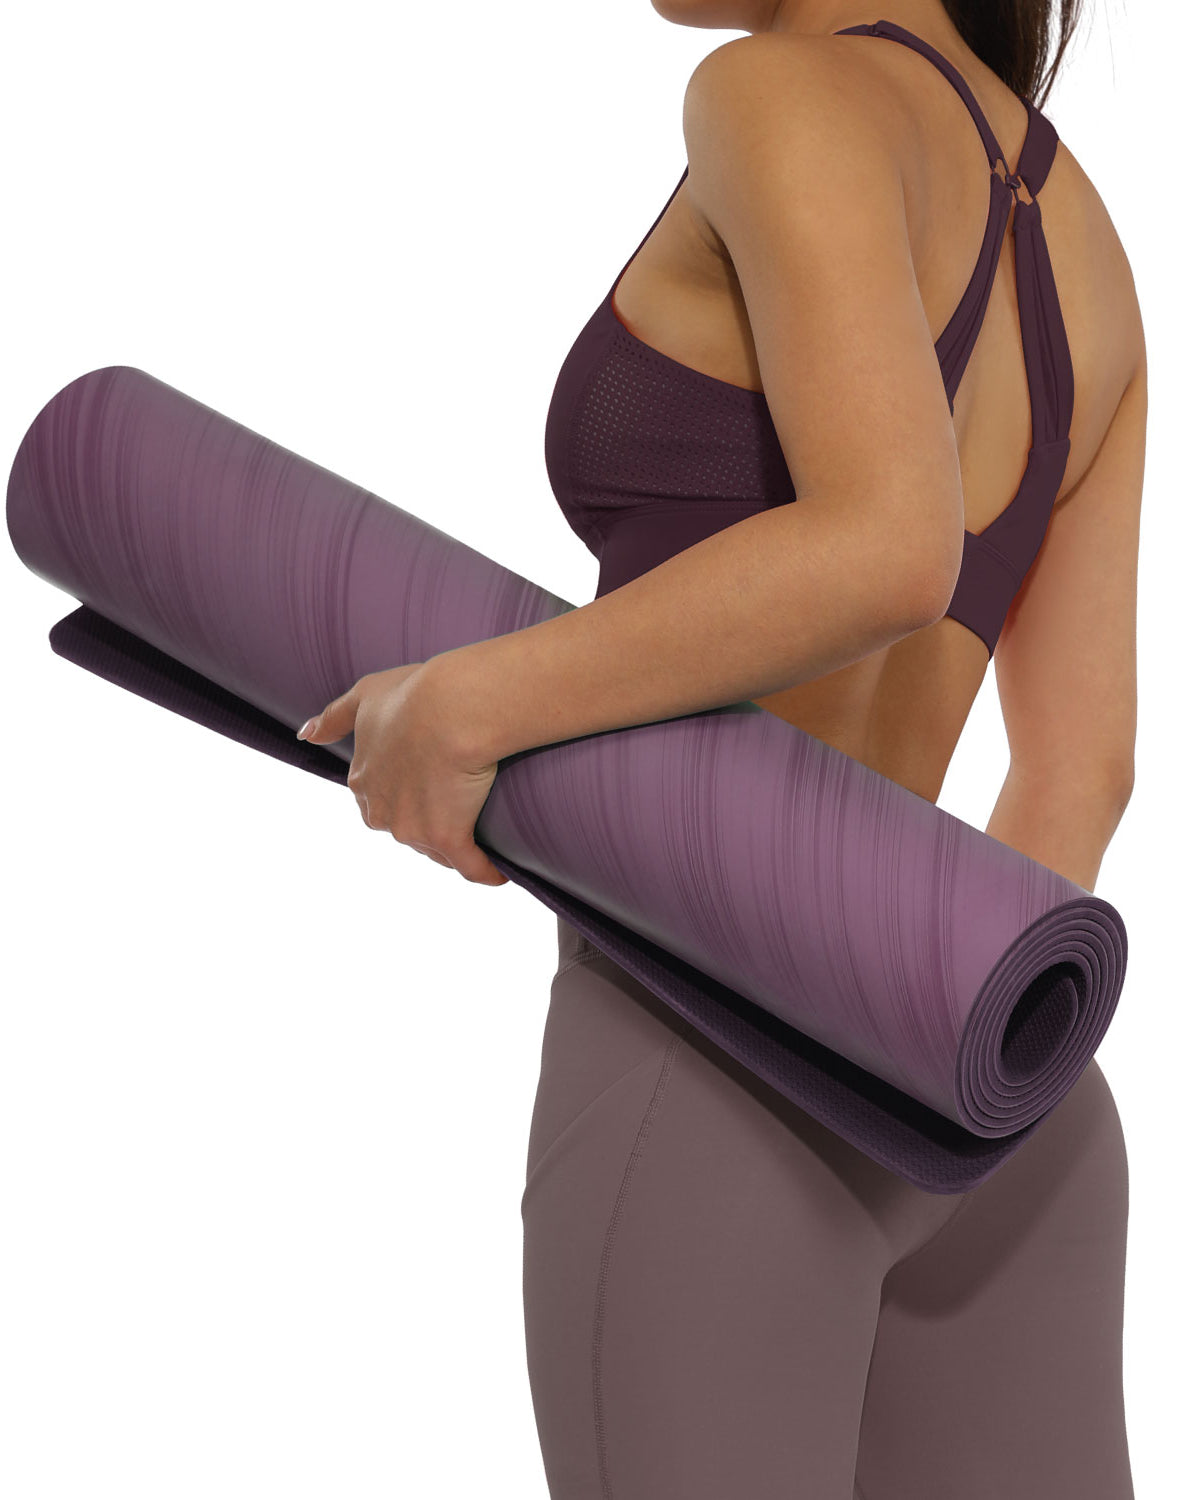 Eco Friendly PU Yoga Mat Texture Purple 5mm - ododos